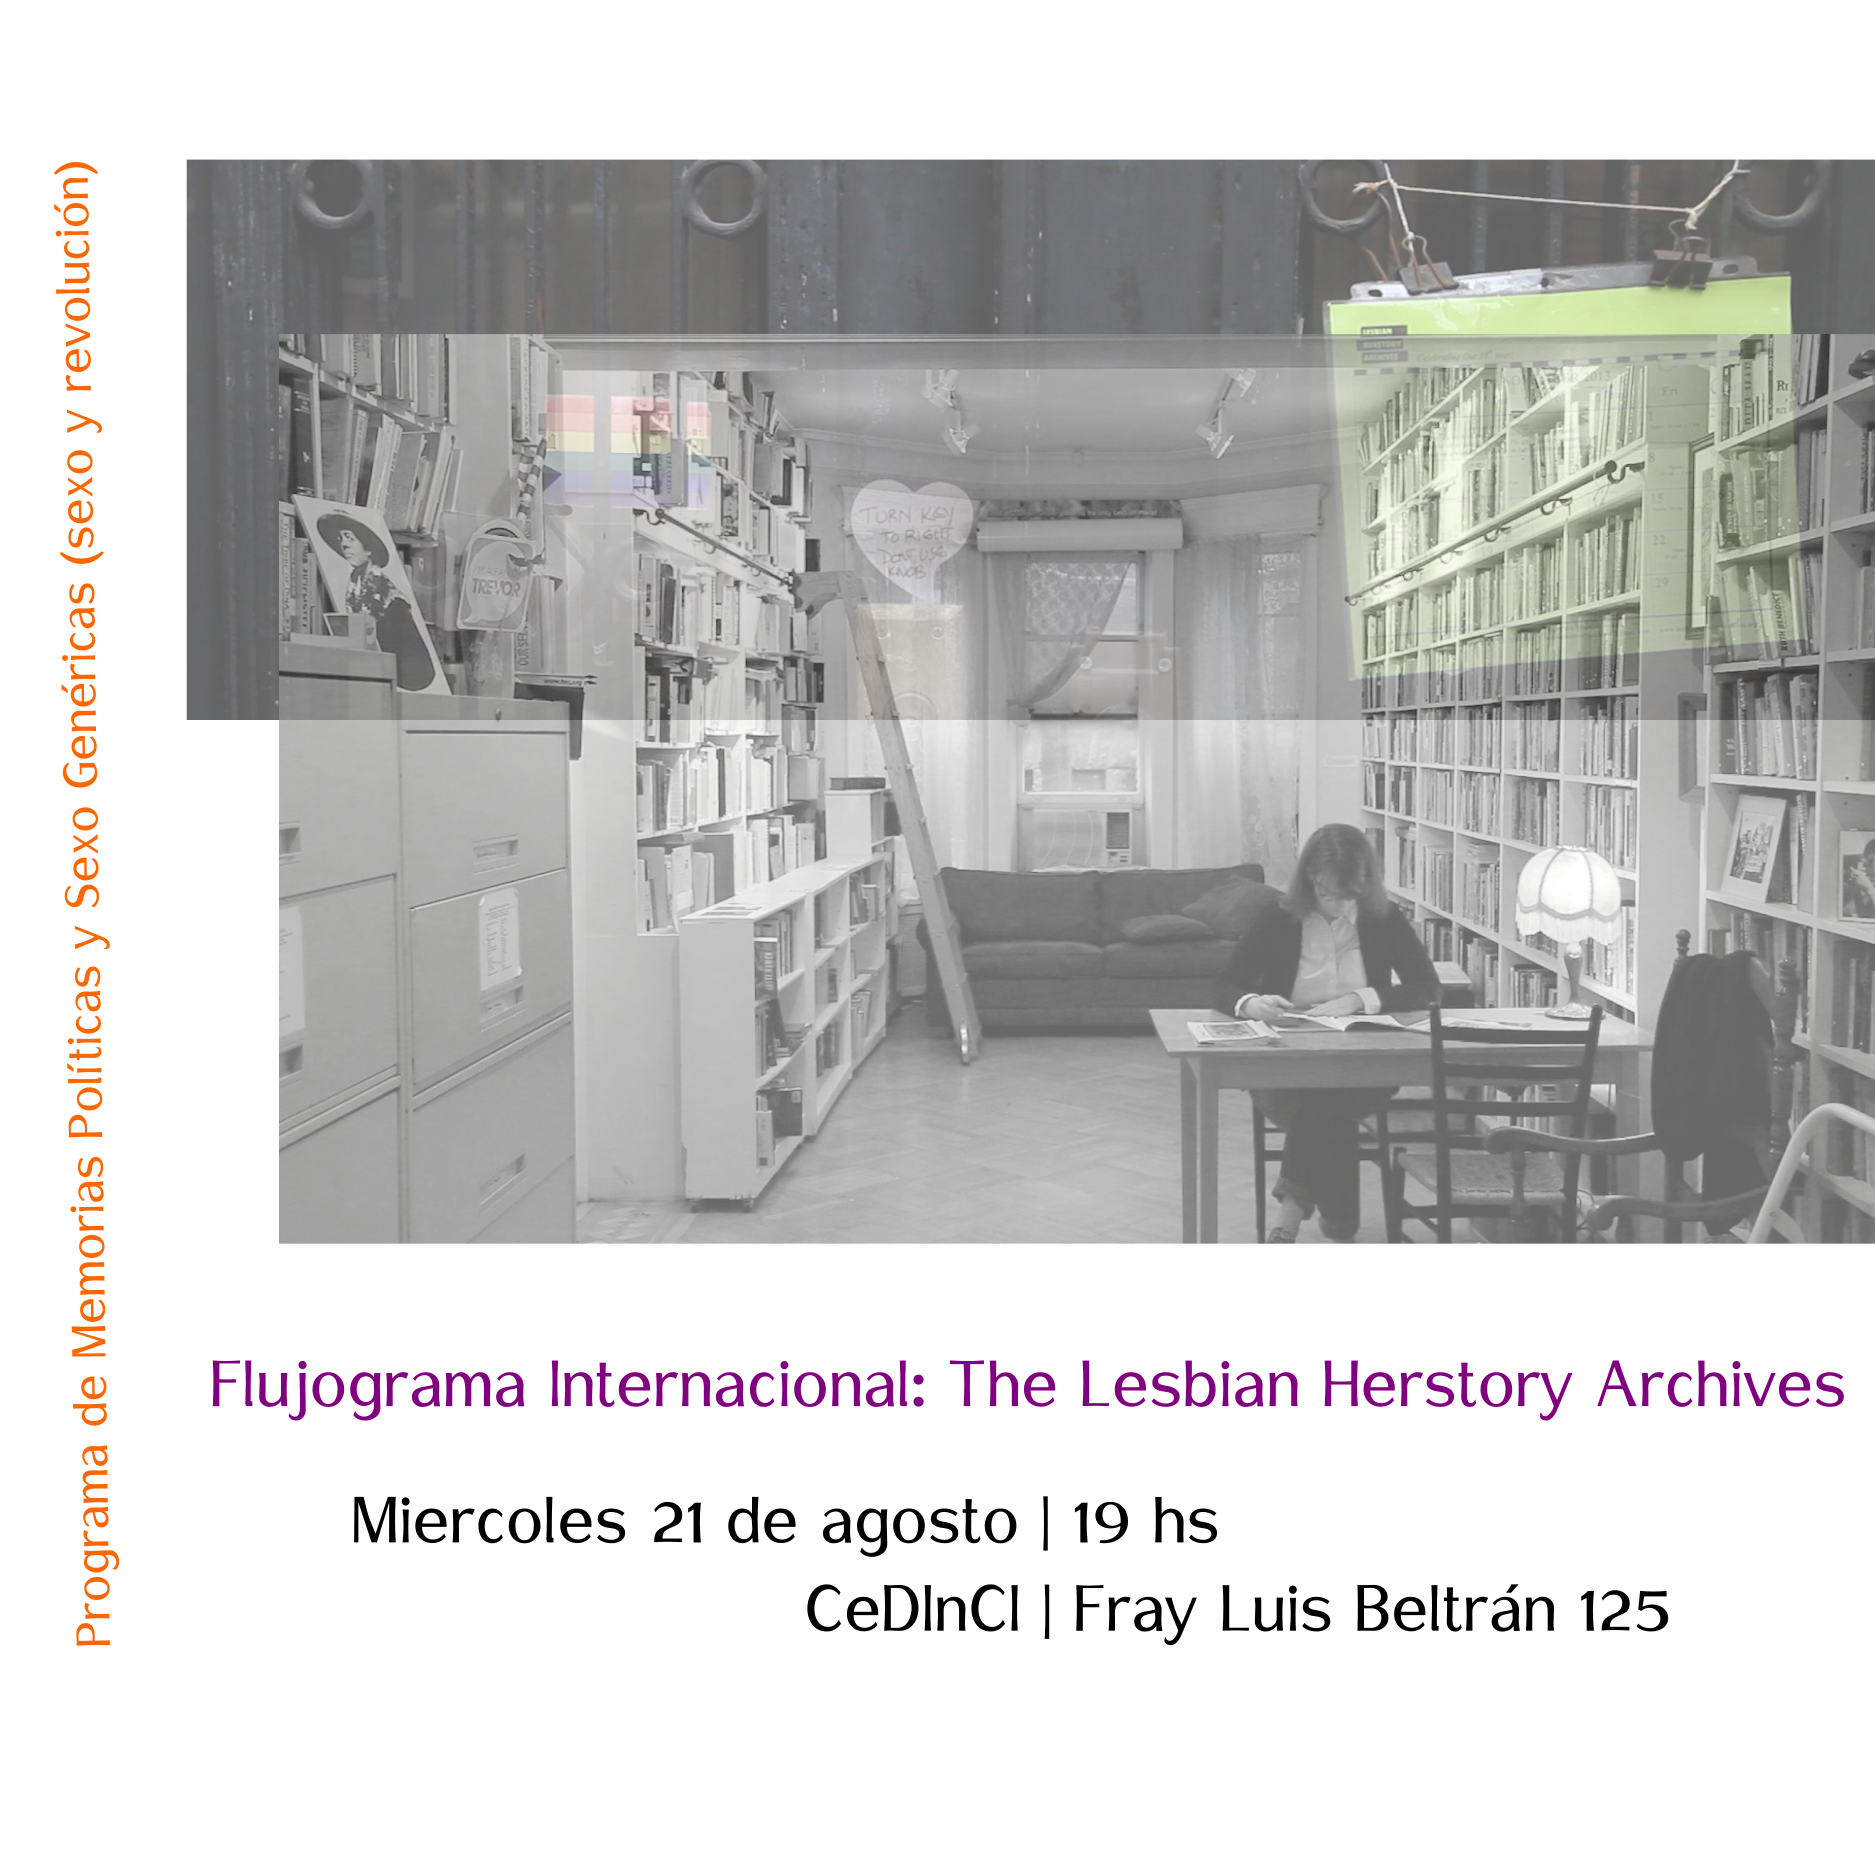 Flujograma internacional: the Lesbian Herstory Archives se presenta en el CeDInCI